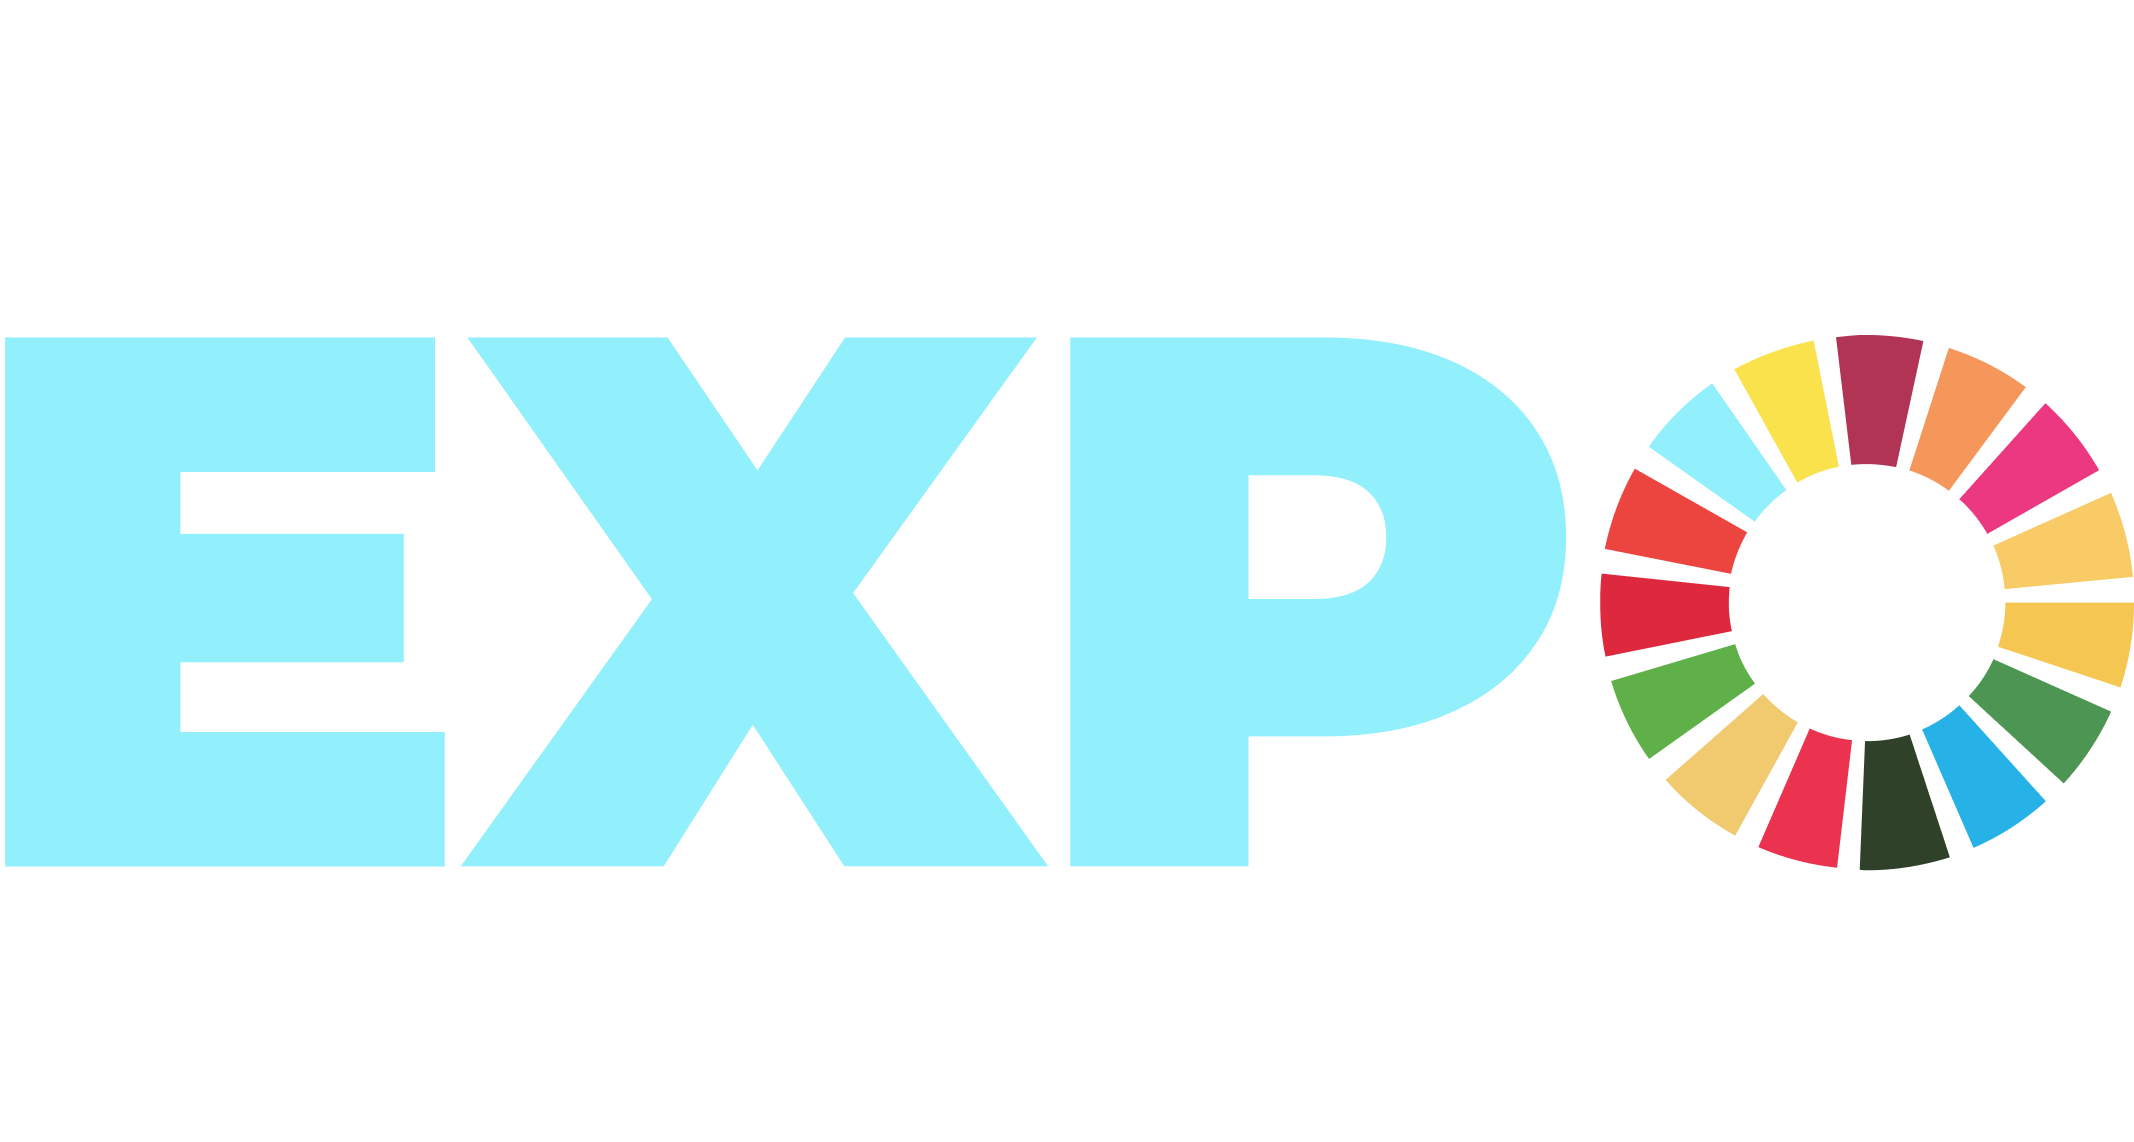 BLOCKCHAIN EXPO